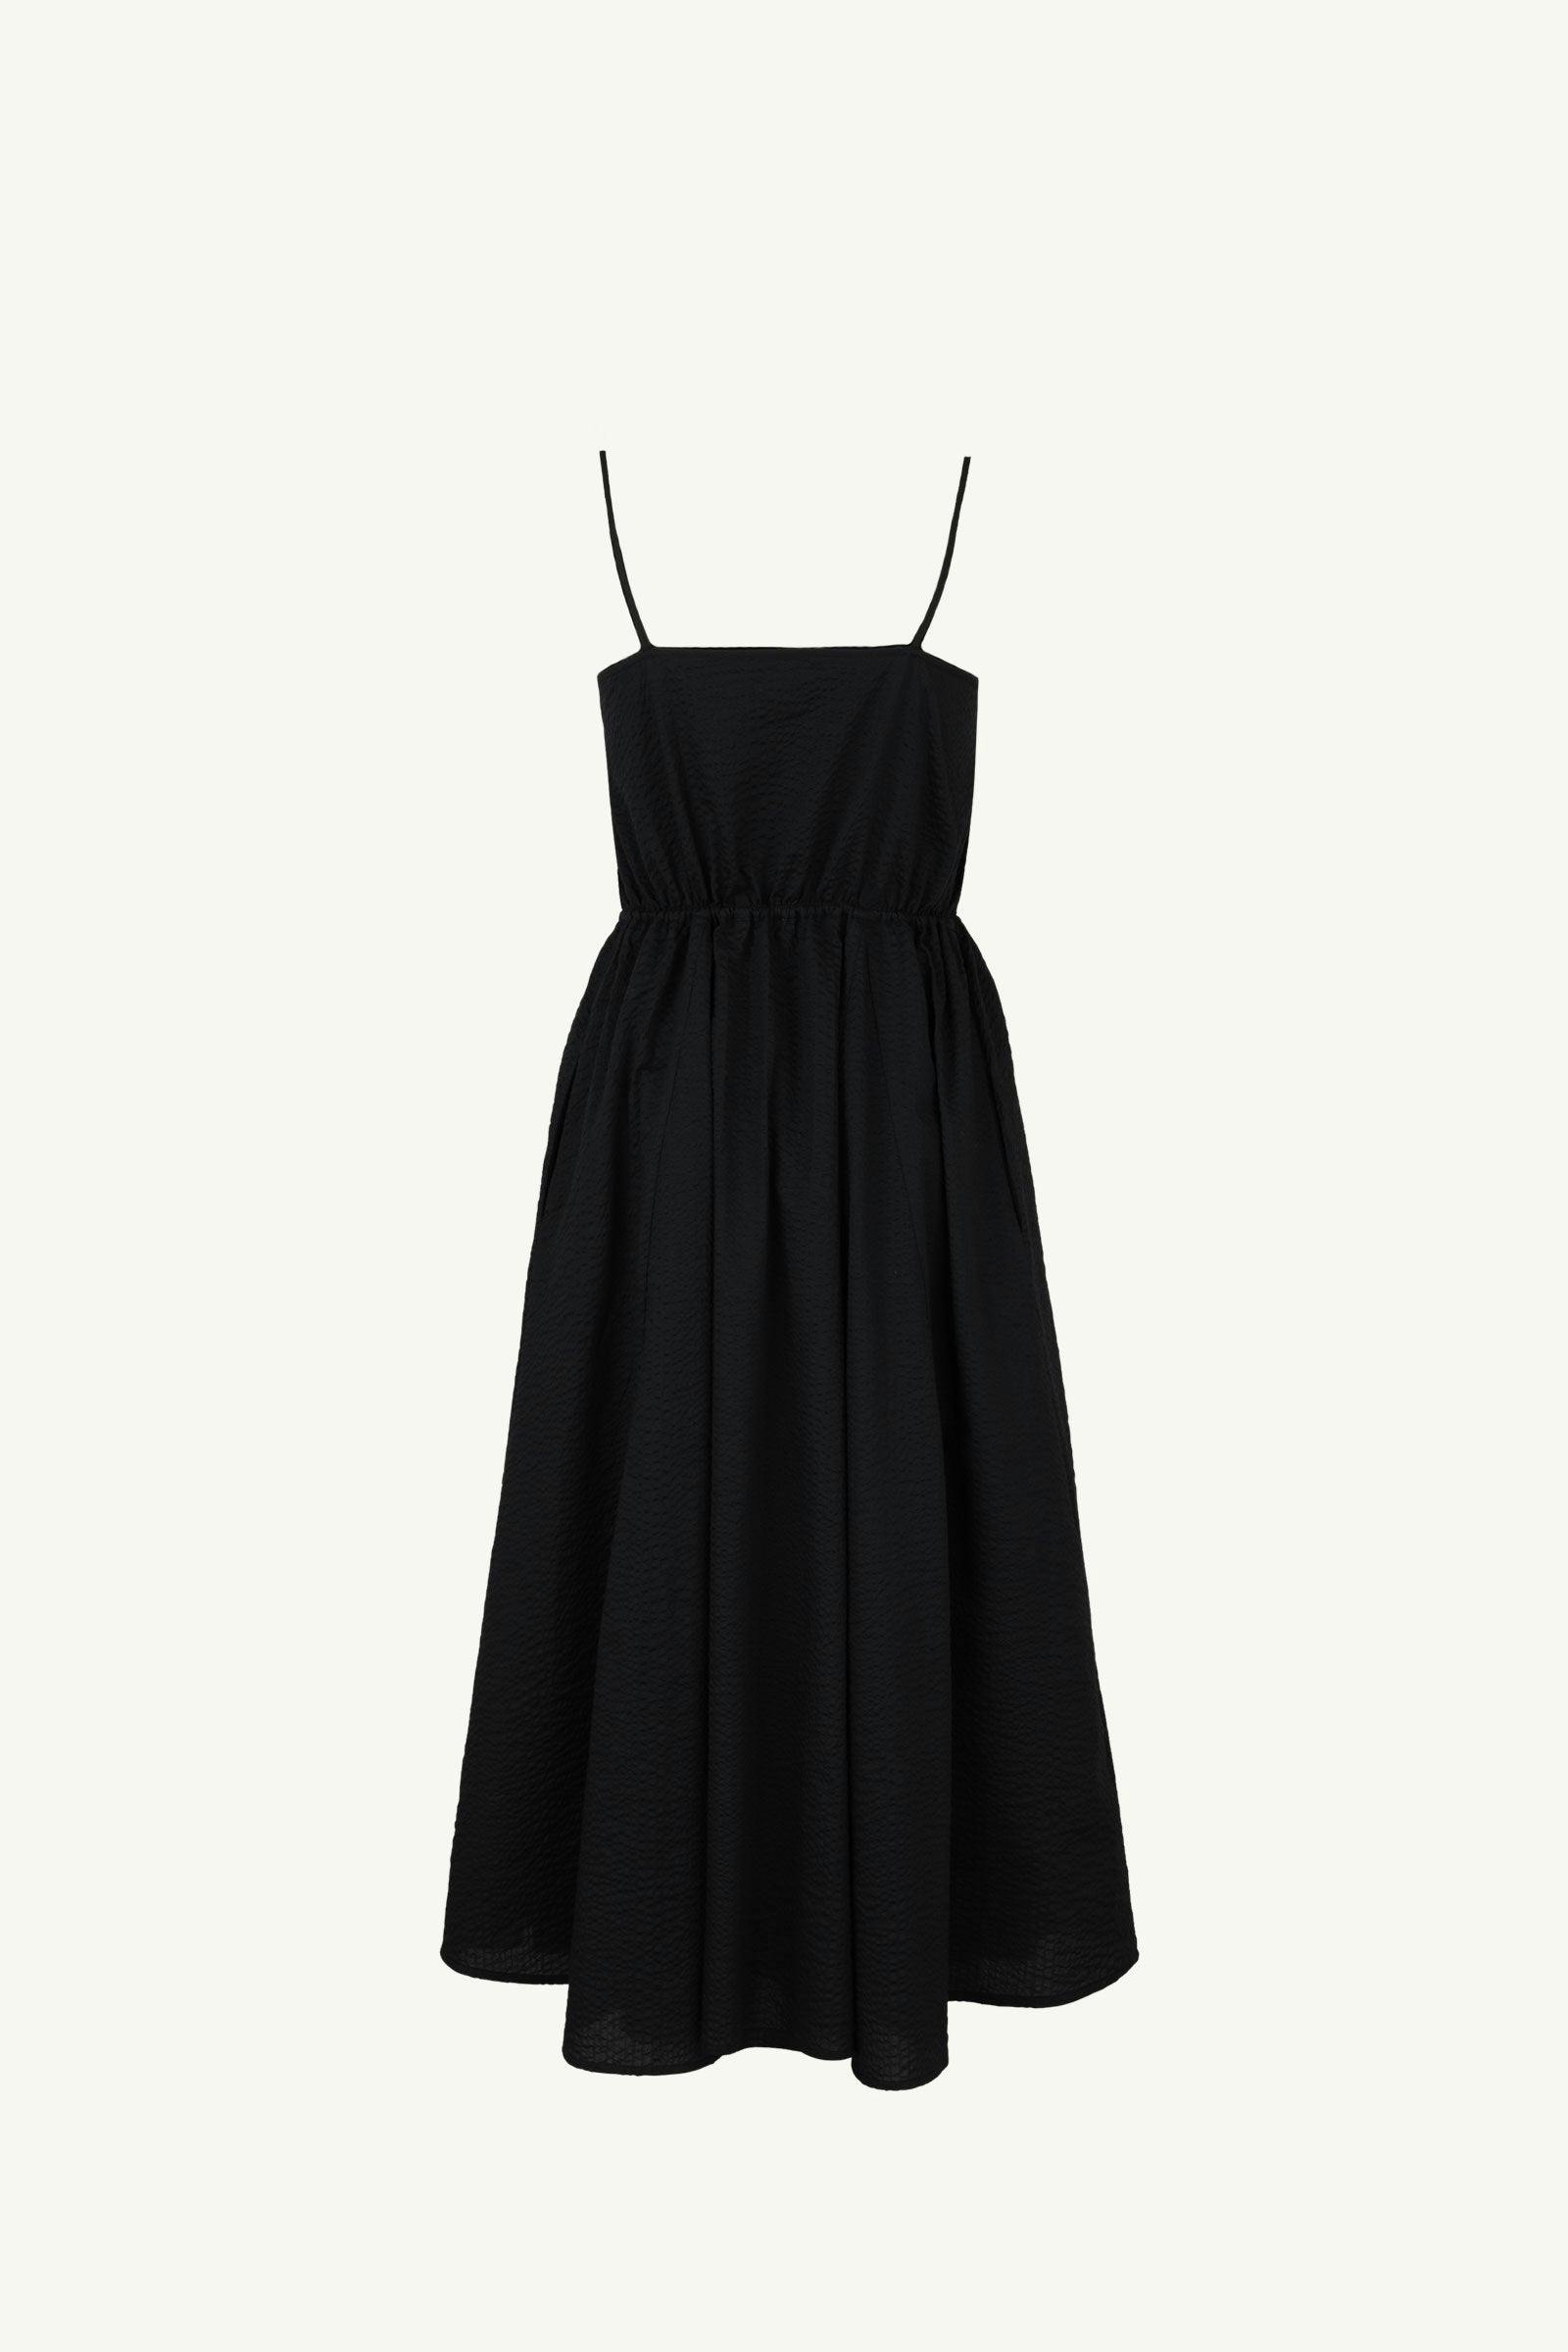 Bistro Dress | V-Neck Flare Dress | Black Colour | 100% Cotton ...